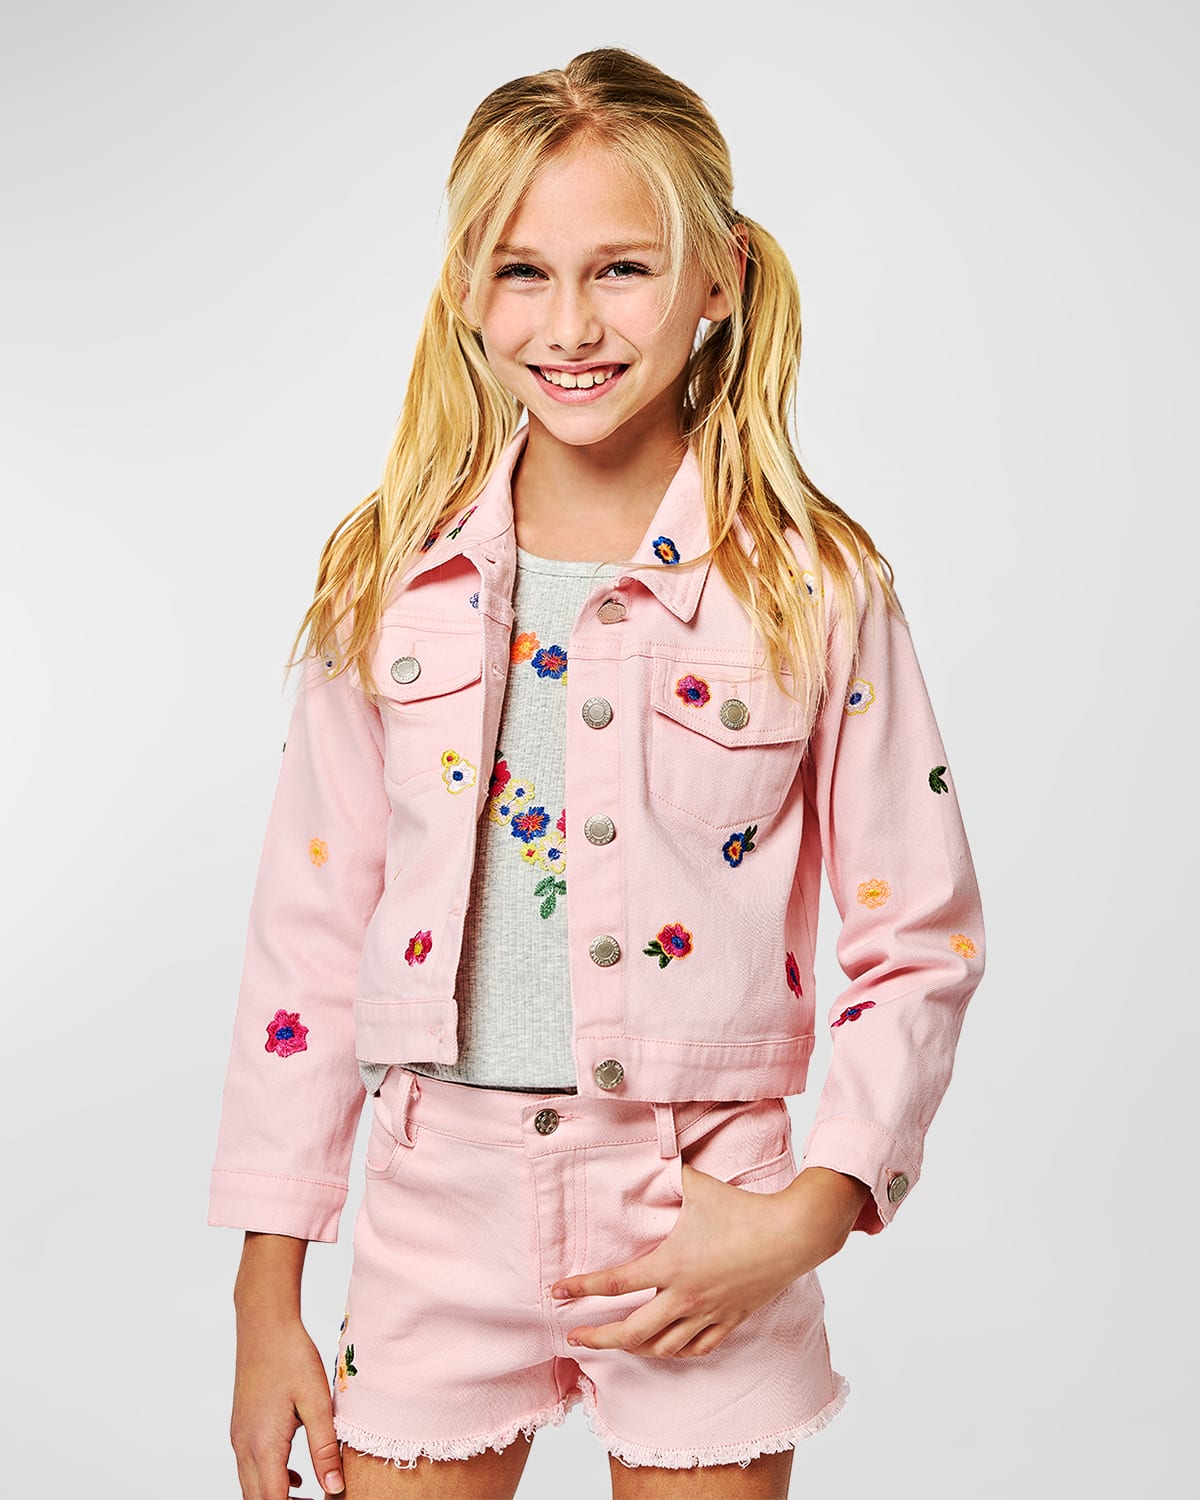 Hannah Banana Kids' Girl's Floral Embroidered Denim Jacket In Pink